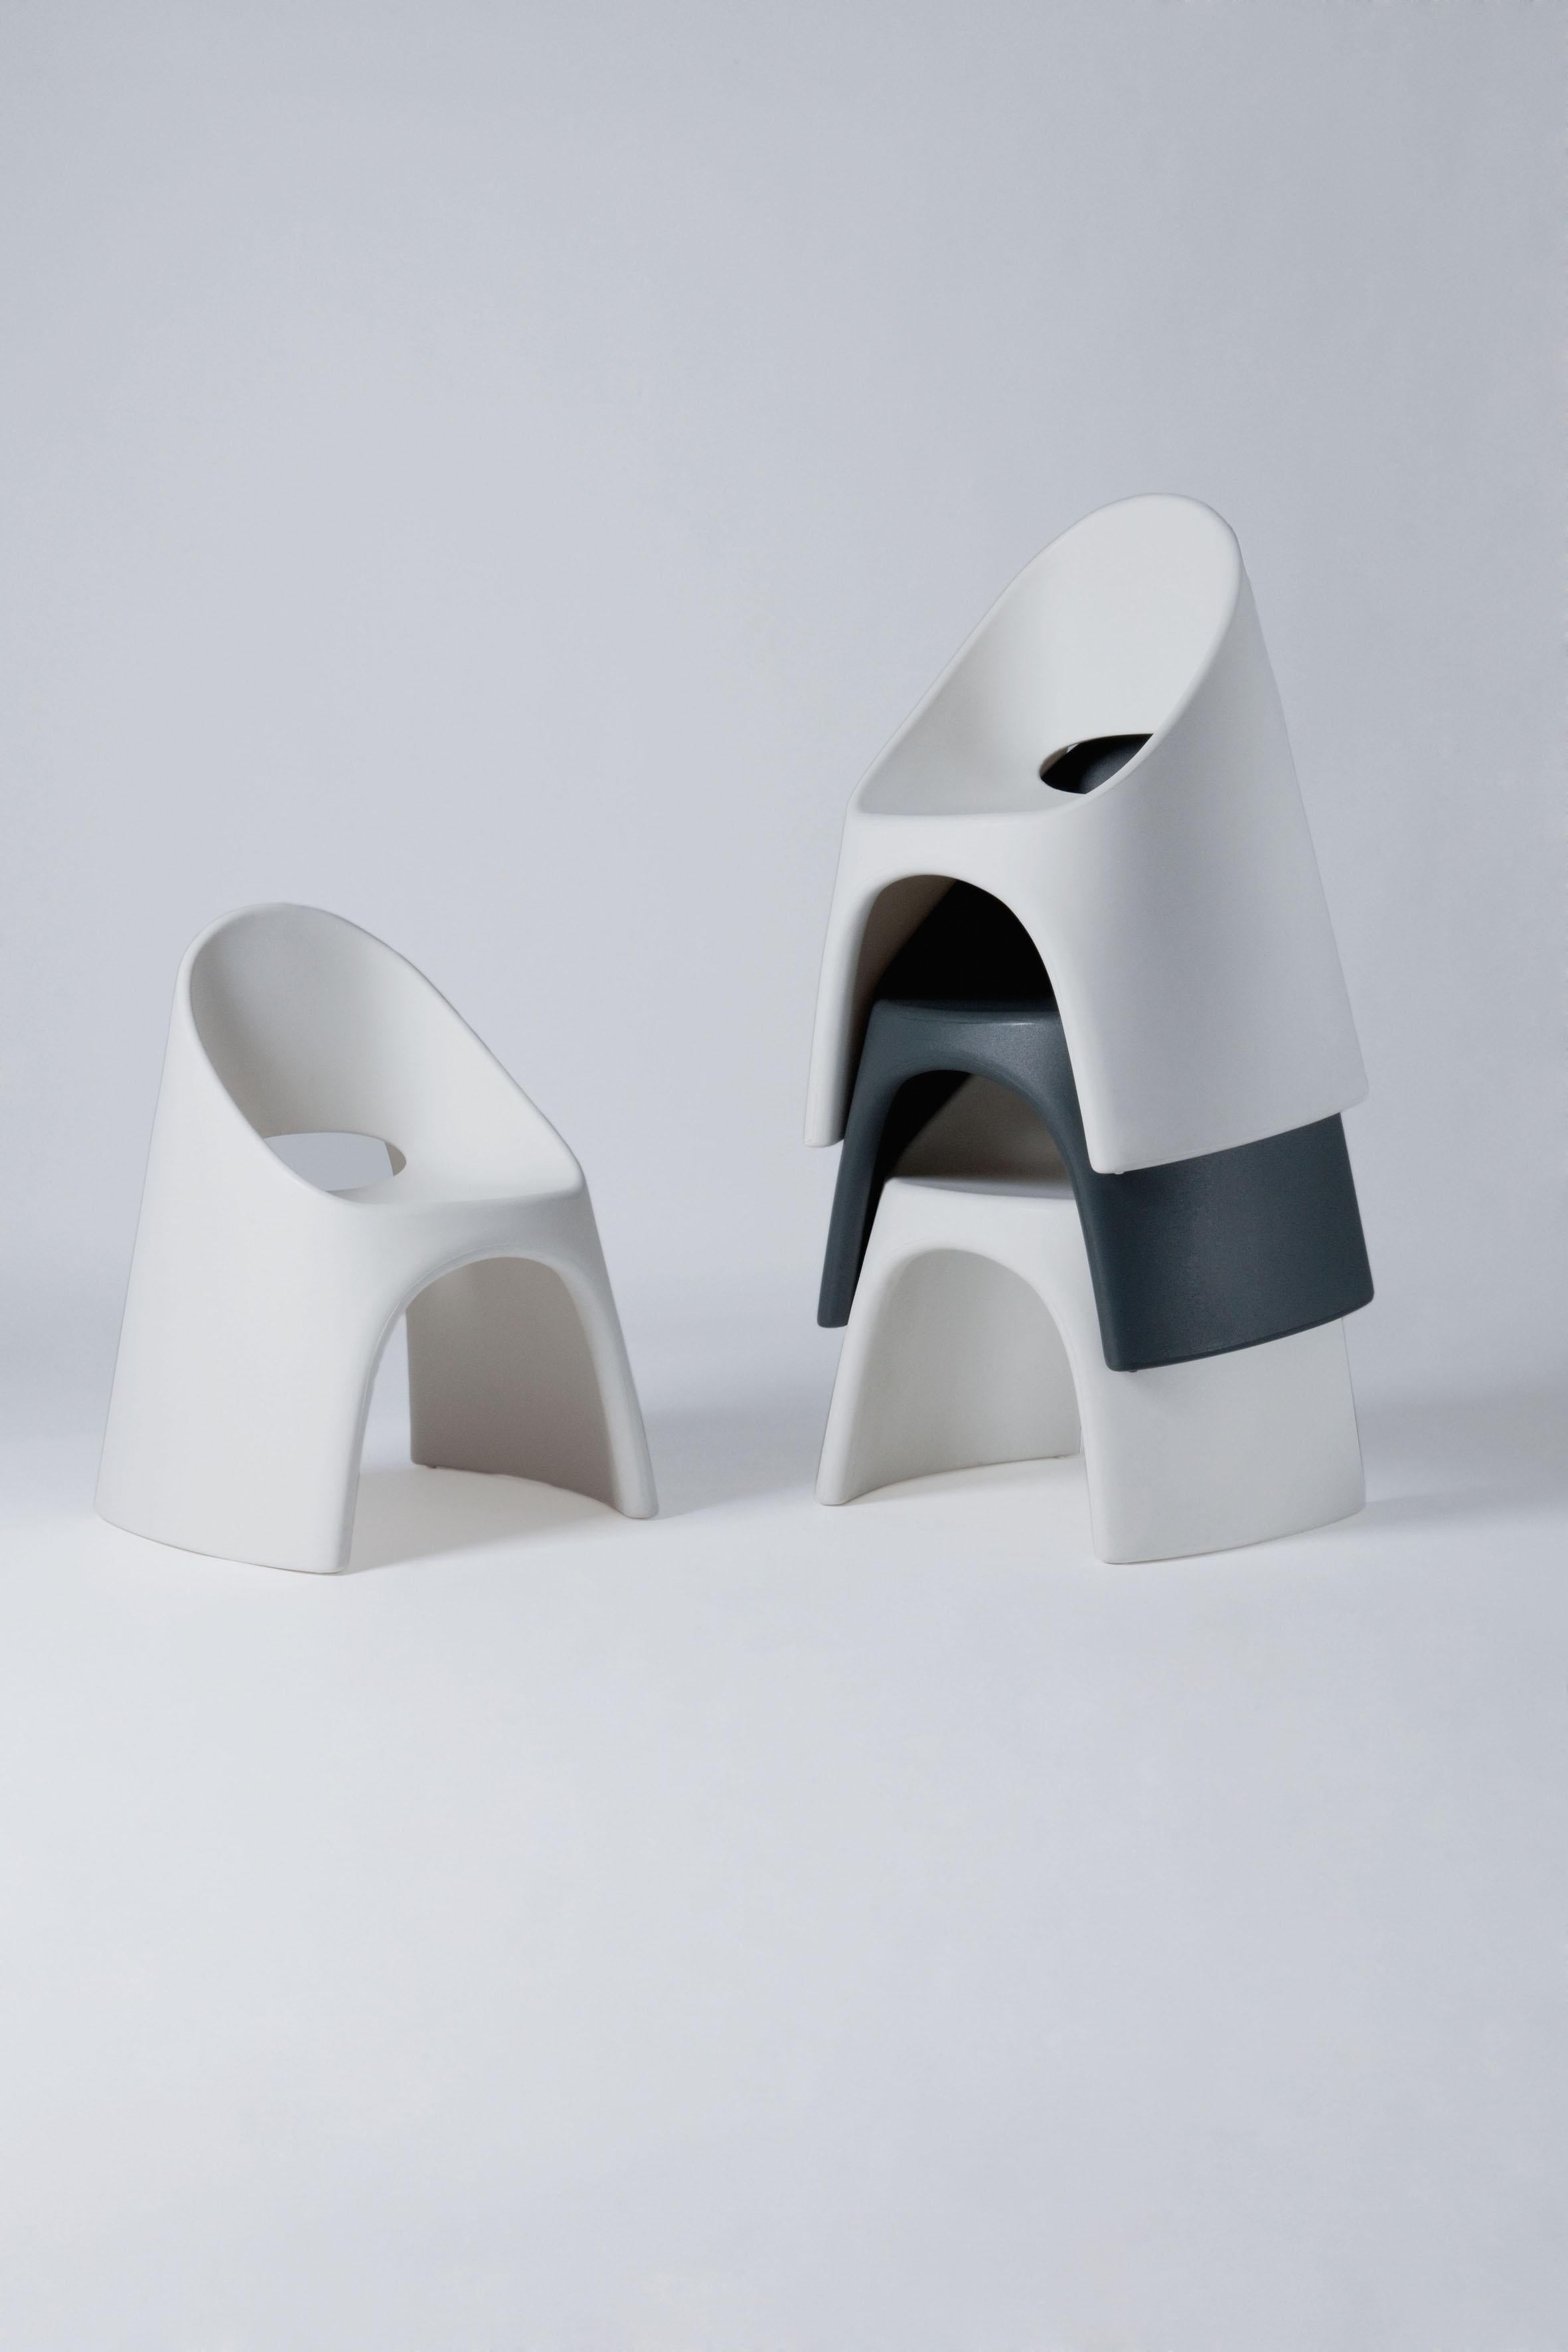 Italian Slide Design Amélie Chair in Pumpkin Orange by Italo Pertichini For Sale